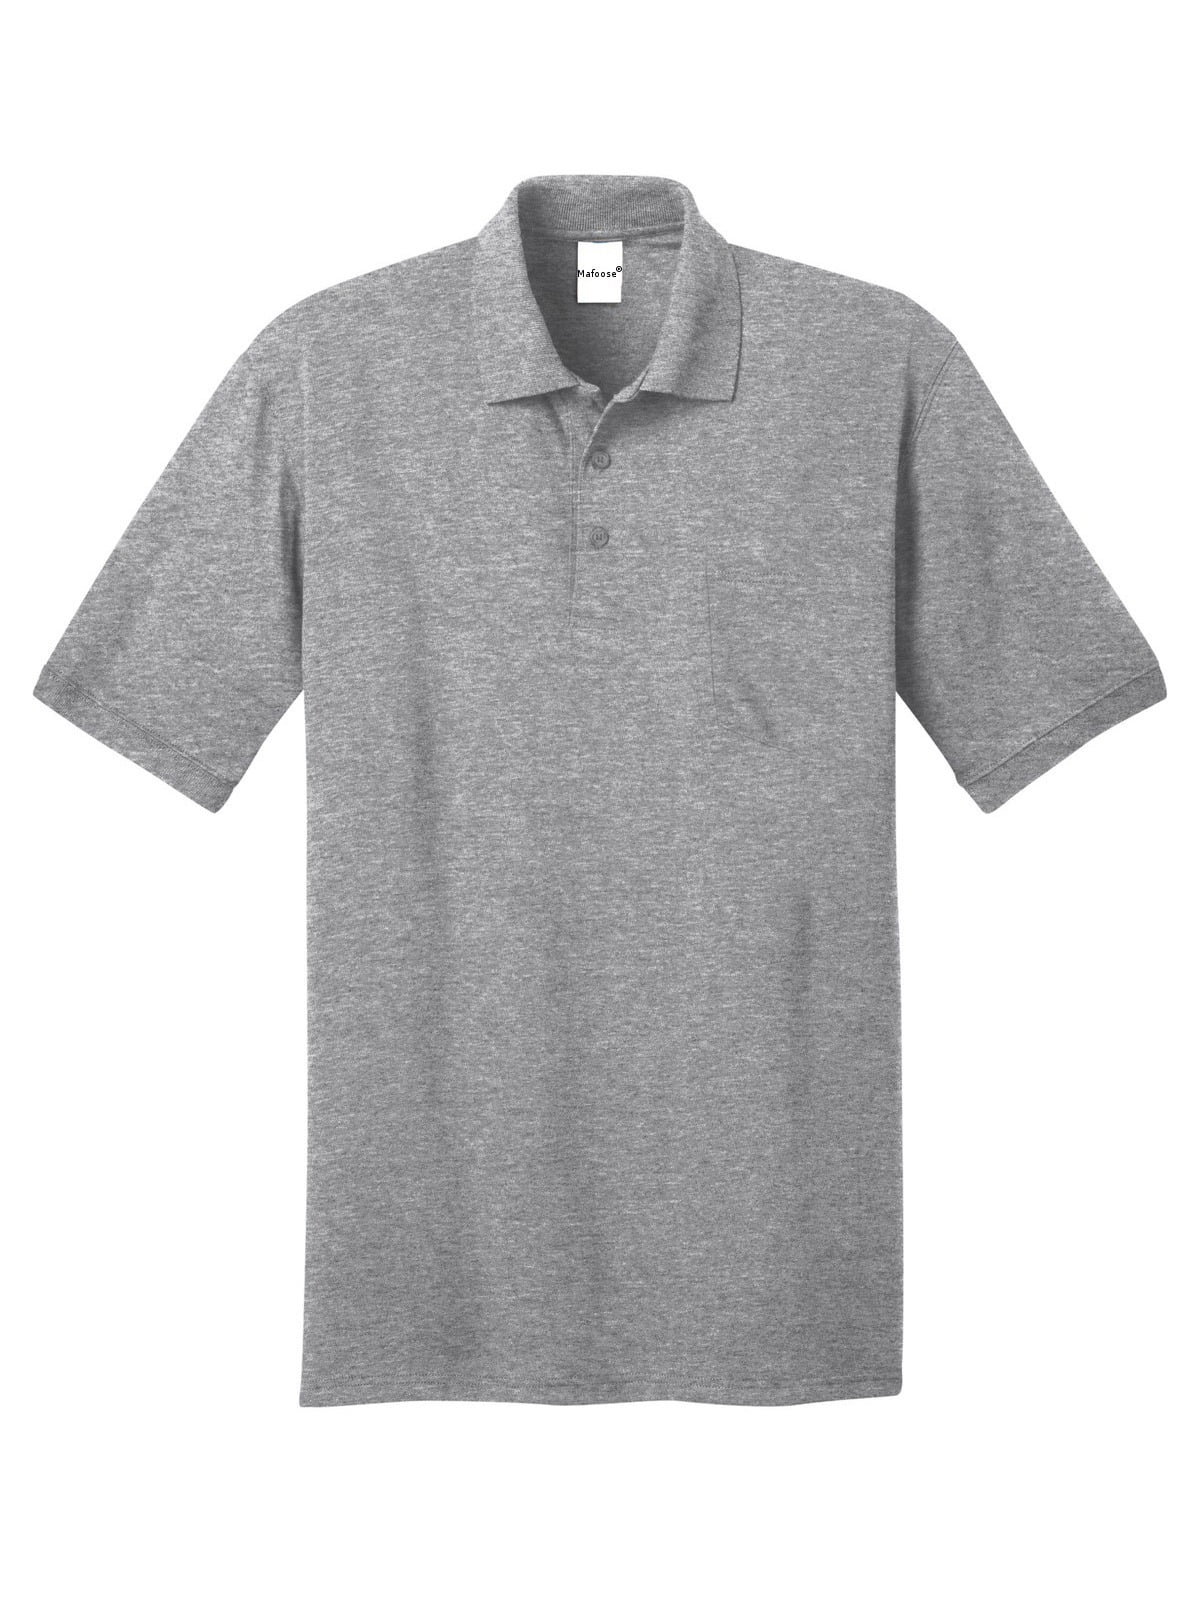 Mafoose Mens Core Blend Jersey Knit Pocket Polo Shirt